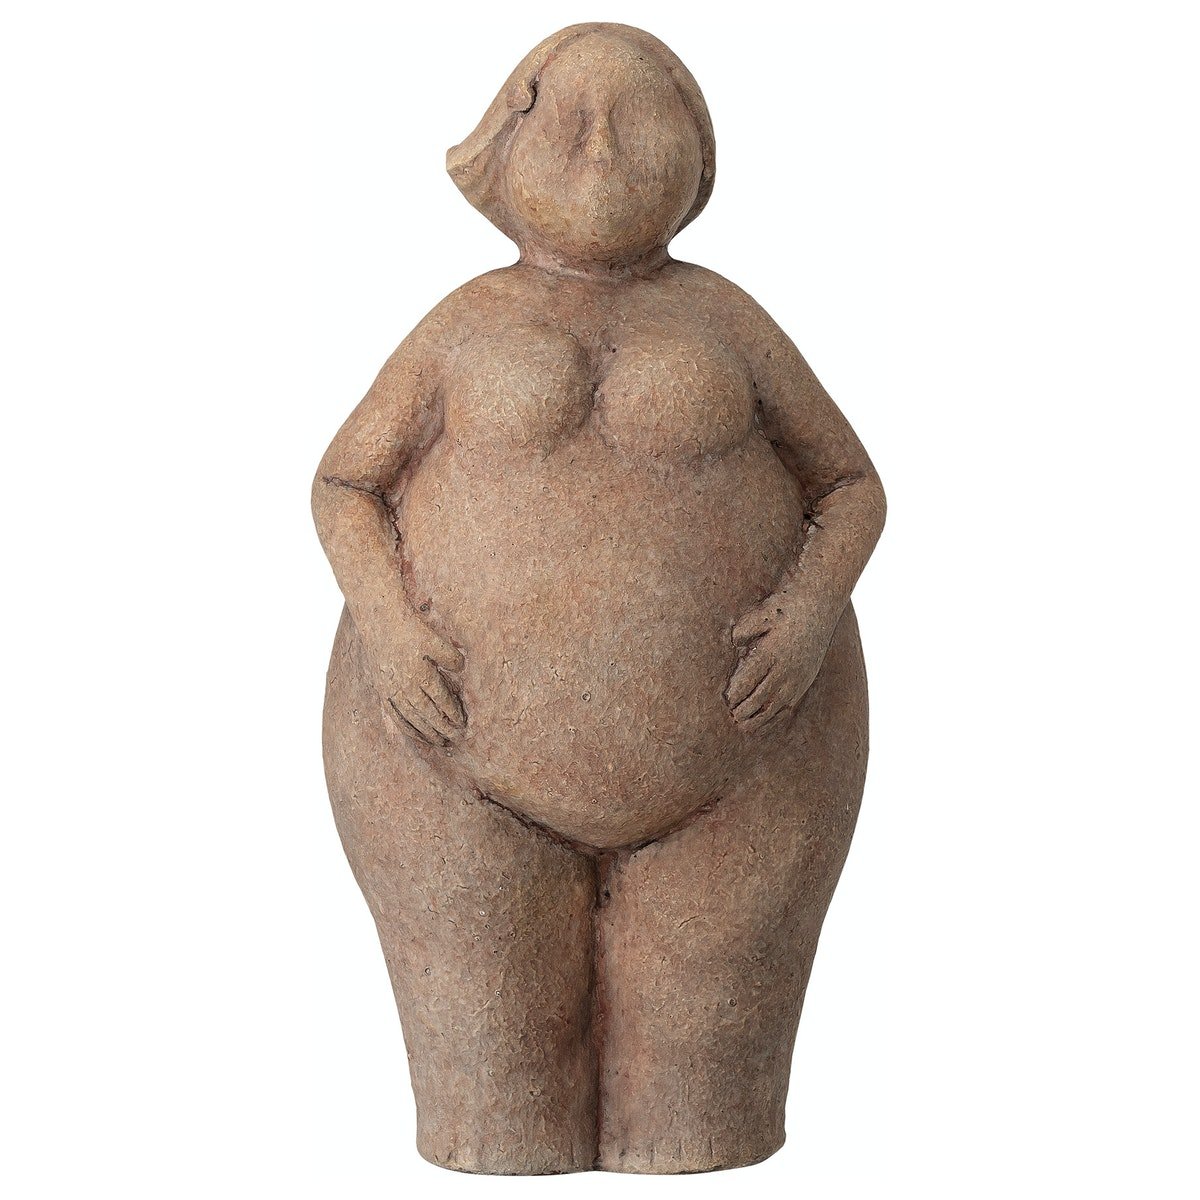 4: Sidsel, Deko, Terracotta by Bloomingville (H: 25 cm. B: 10 cm. L: 13 cm., Brun)